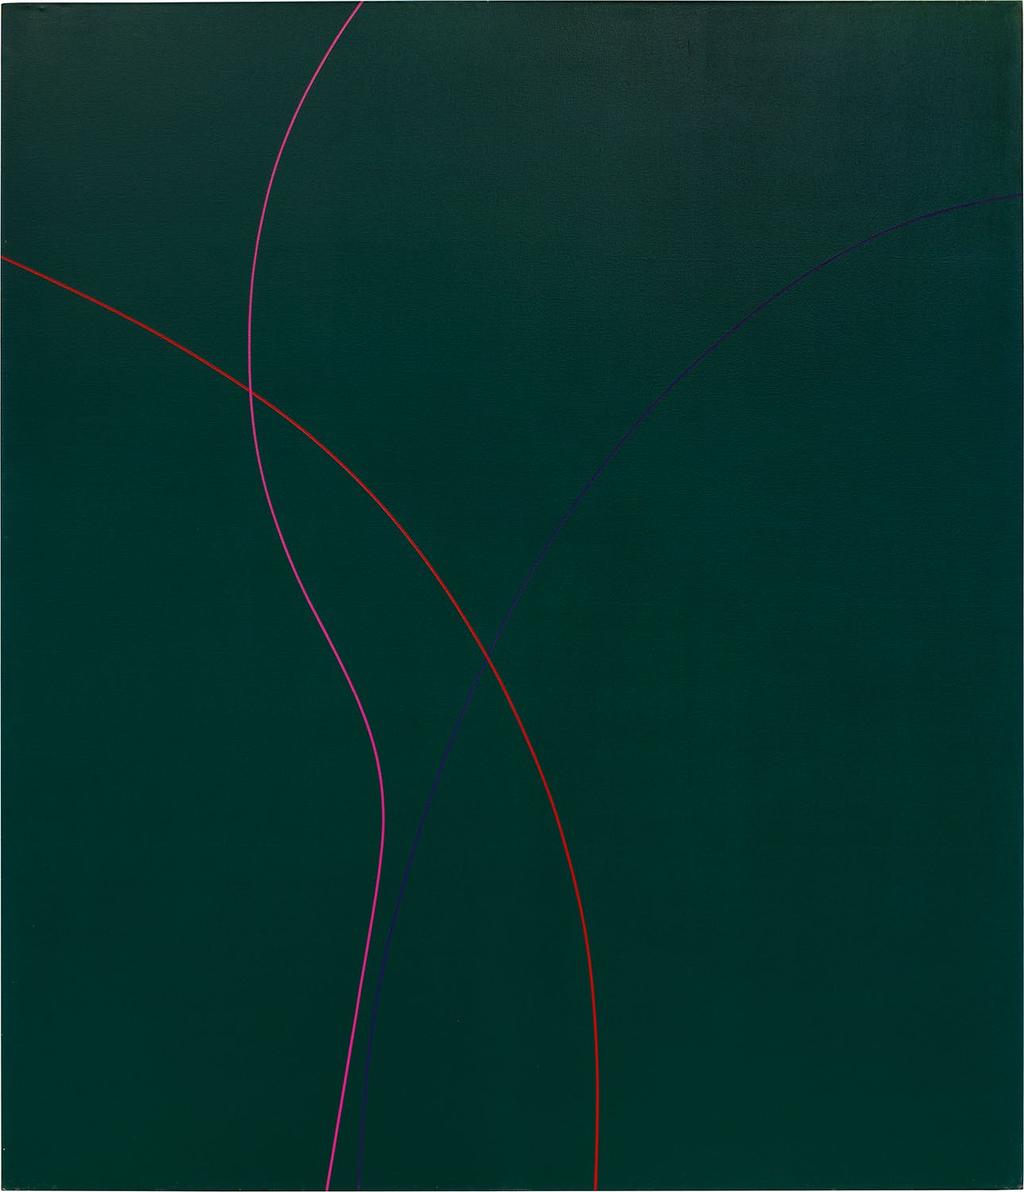 VIRGINIA JARAMILLO, Untitled, 1971, acrylic on canvas, 213.